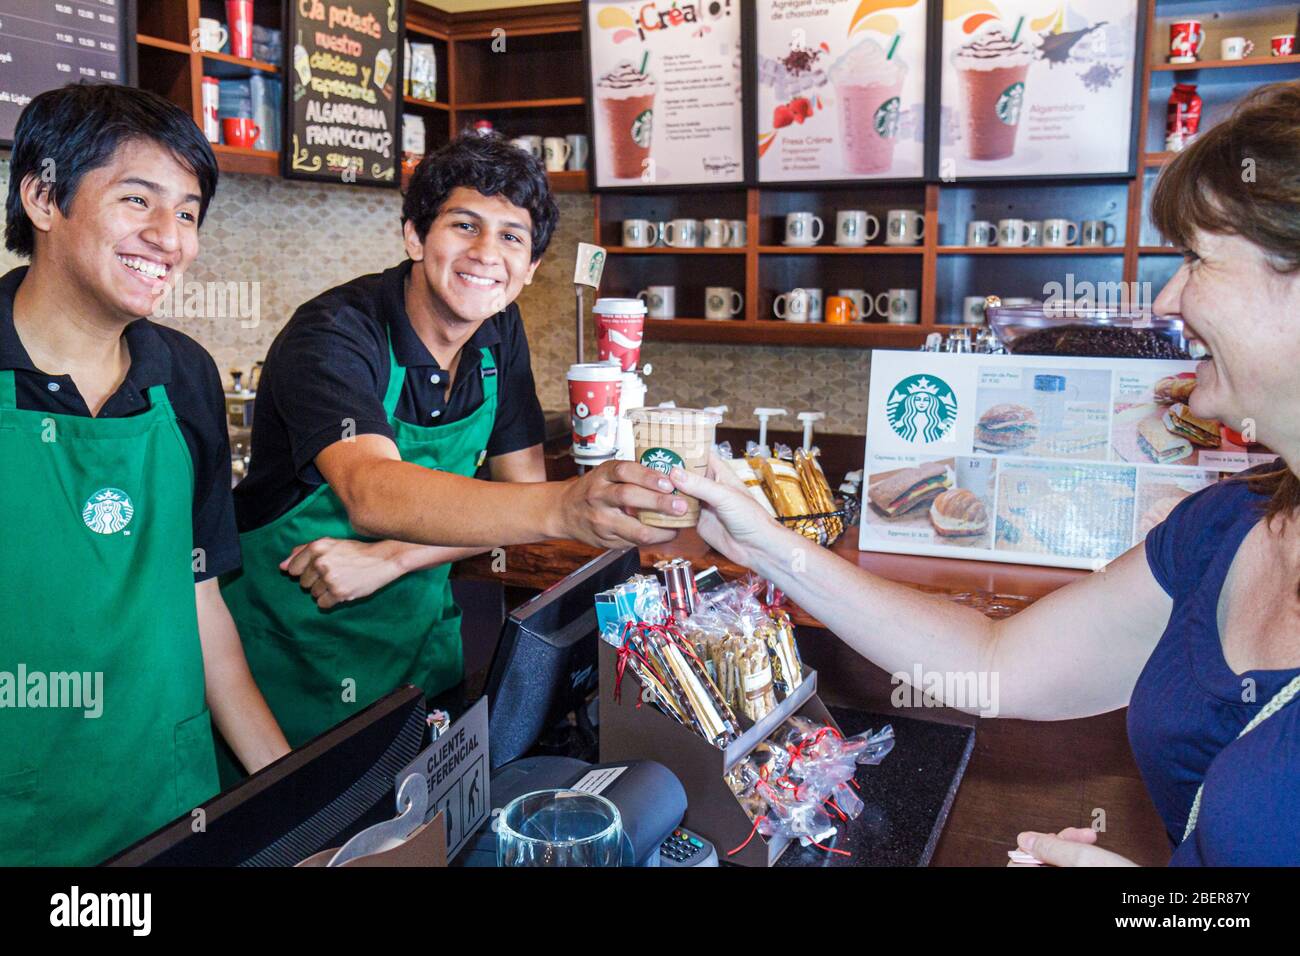 Lima Peru,Starbucks Coffee,inside interior barista baristas cafe,counter,serving green apron cashier,lattee cup,smiling Hispanic boys male teens woman Stock Photo